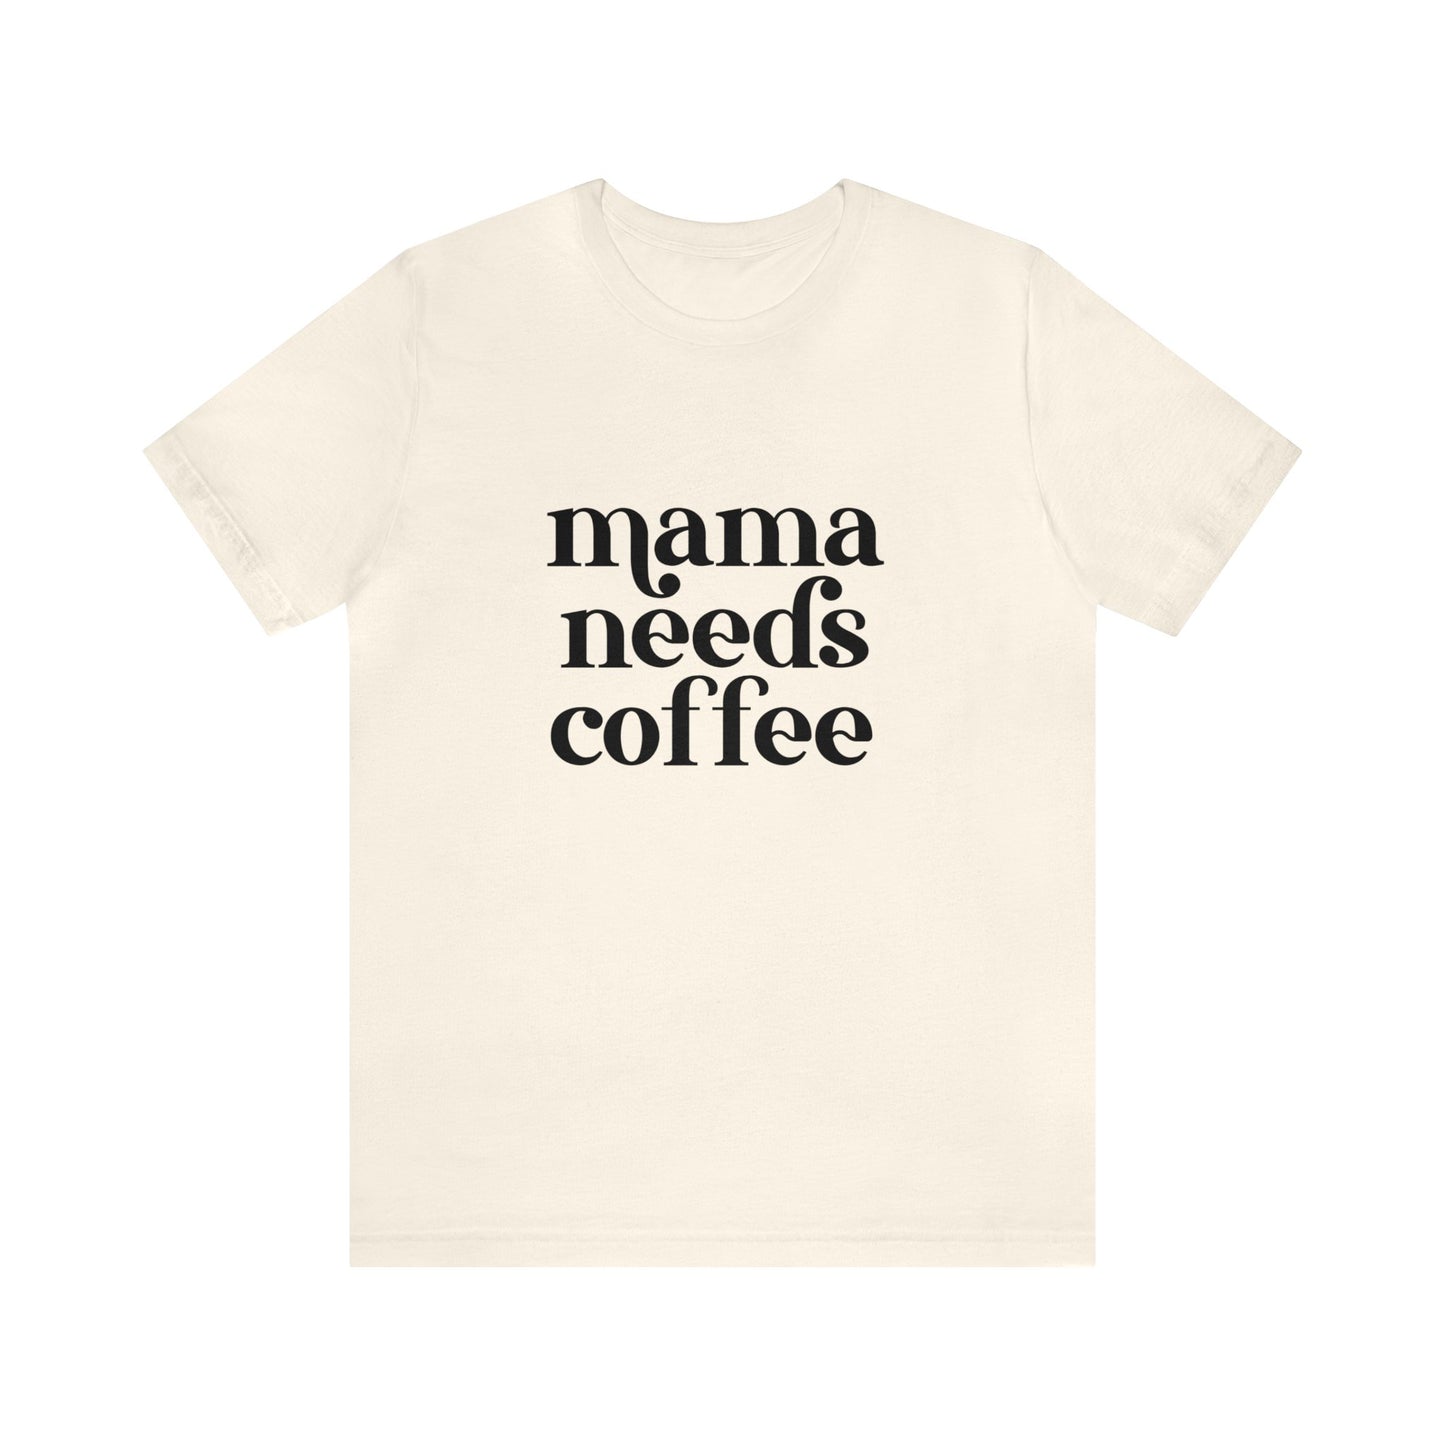 Mama needs coffee Women's Tshirt